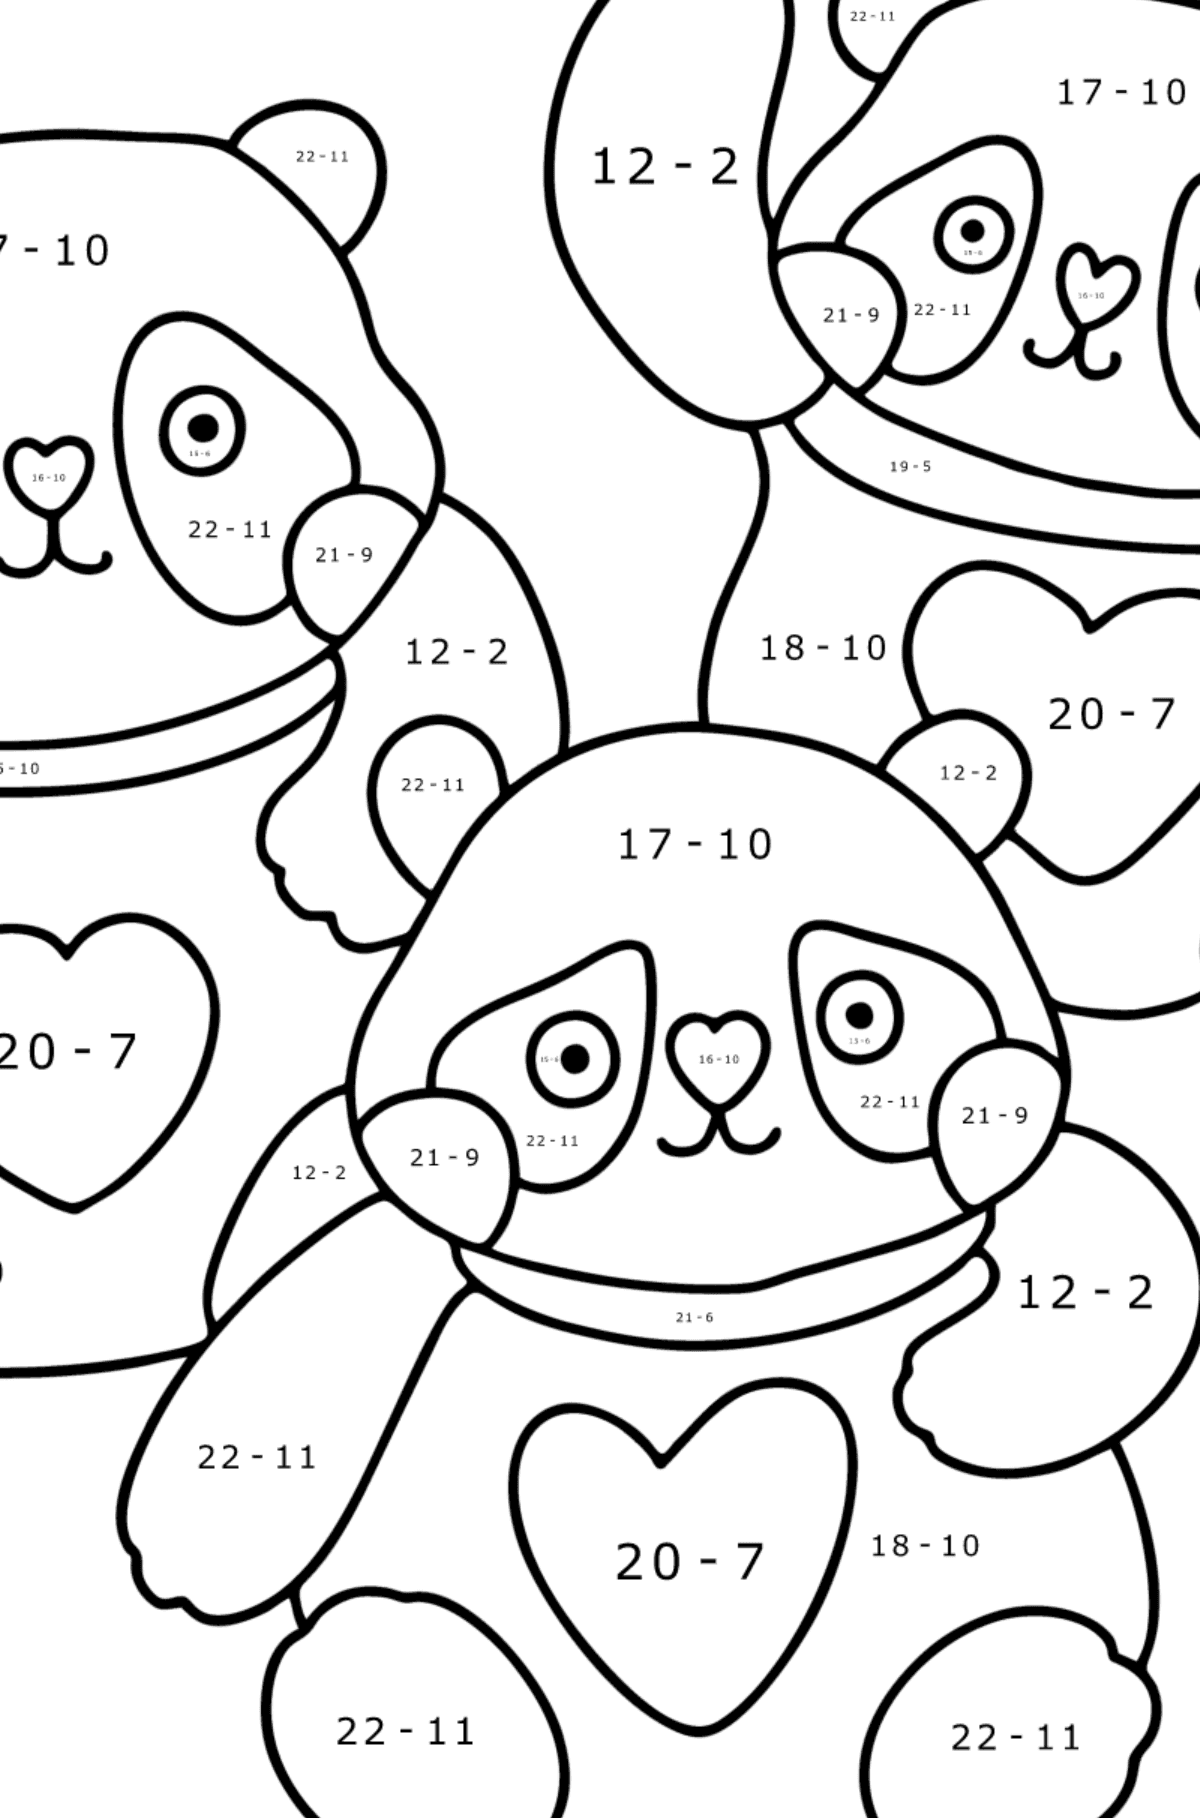 Ausmalbild Kawaii Pandas - Mathe Ausmalbilder - Subtraktion für Kinder